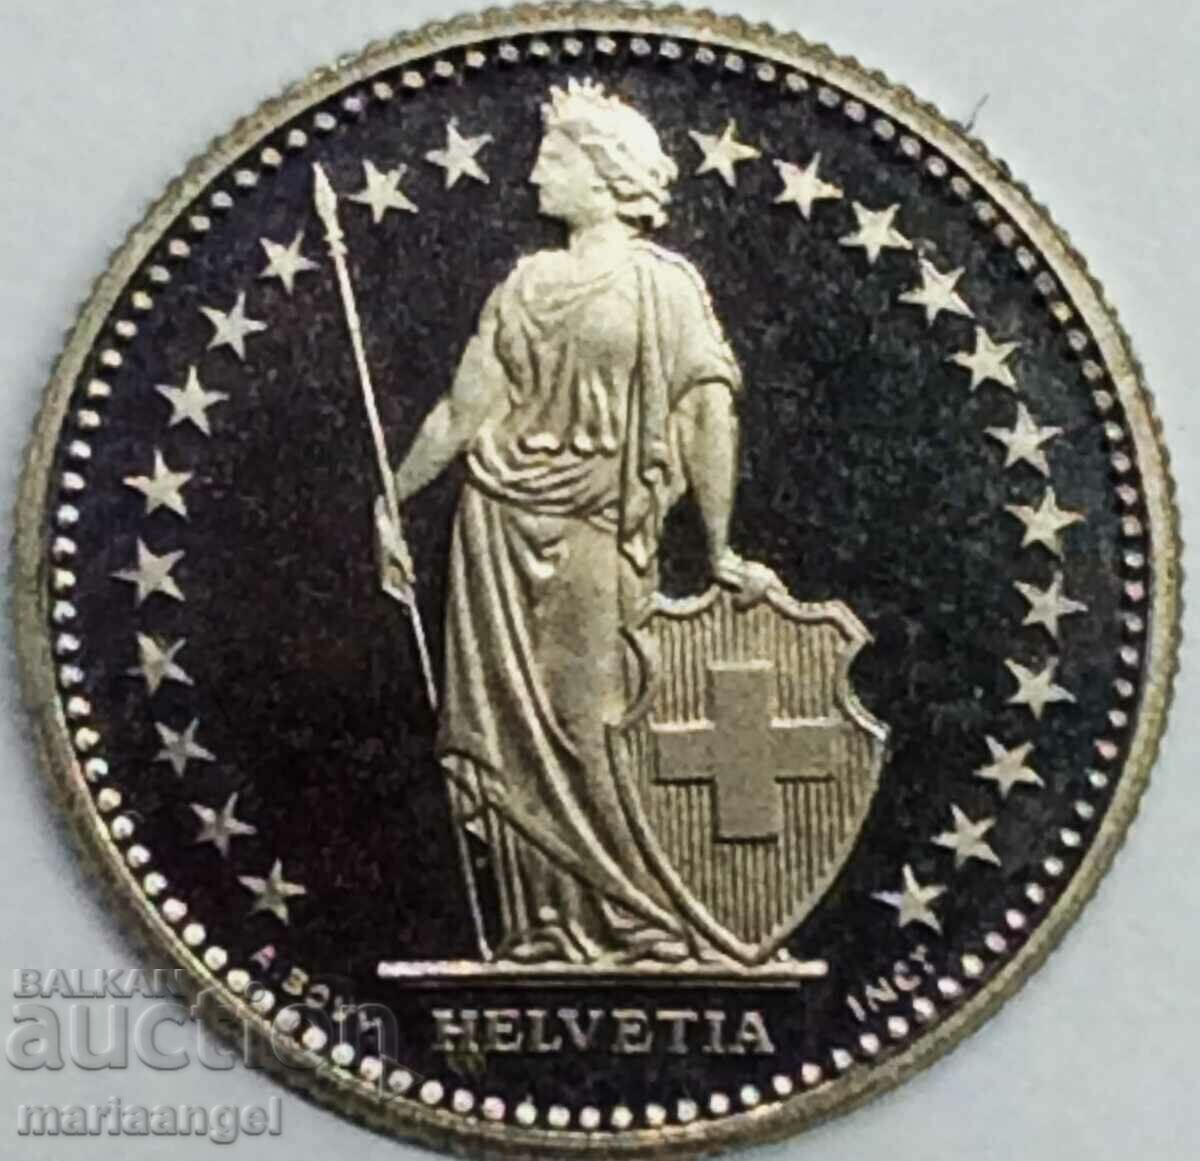 Switzerland 1/2 franc 1992 Helvetia PROOF UNC